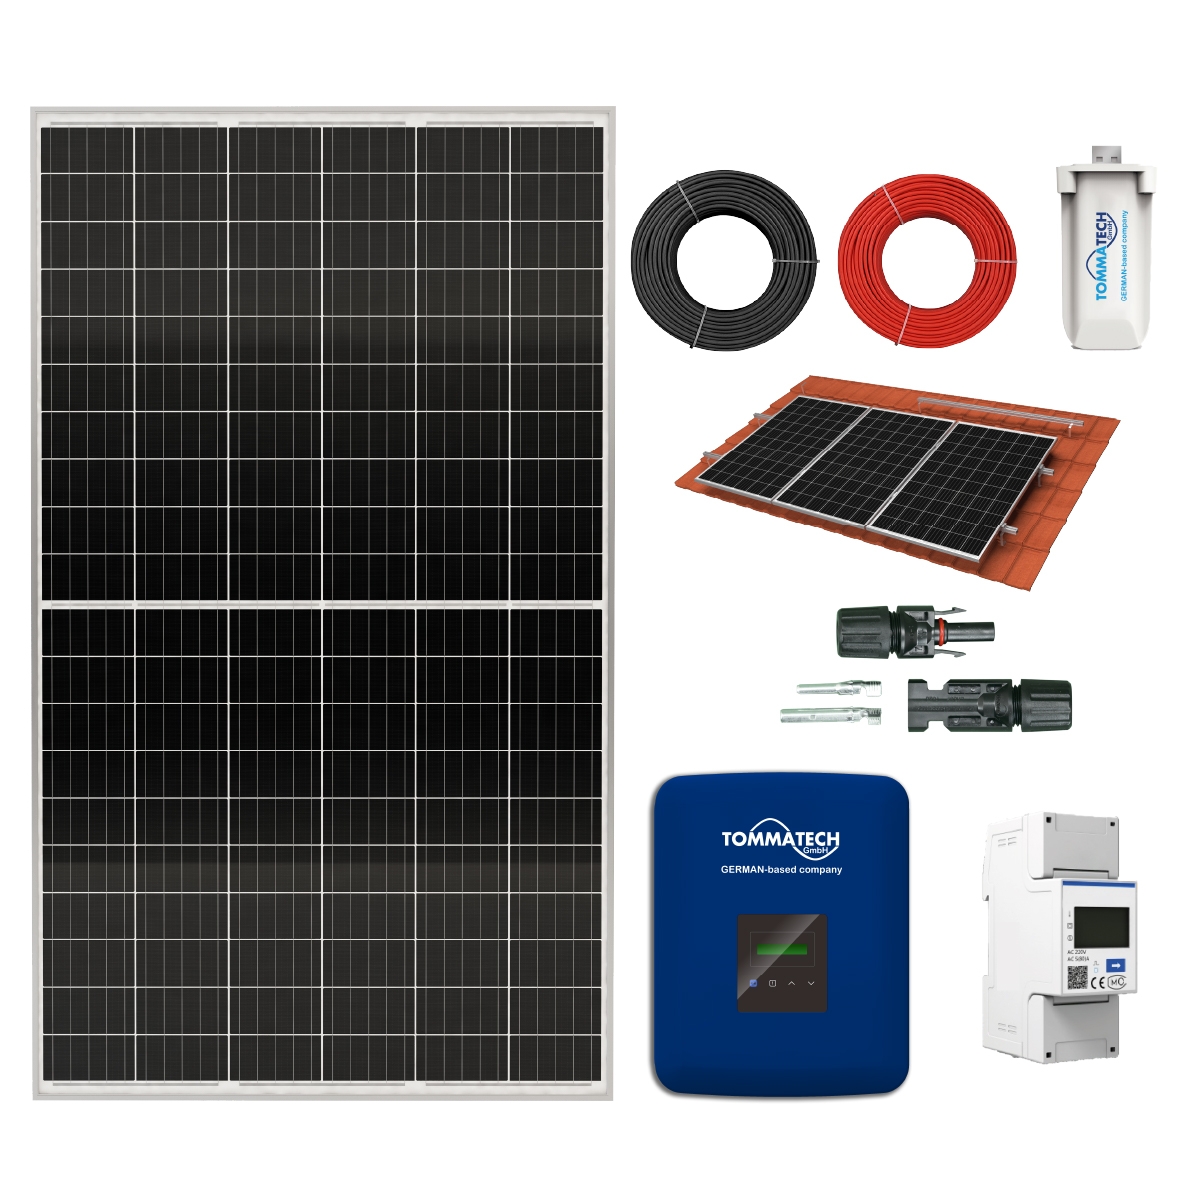 5kW / 7.22kWp Solar On-Grid Plug & Play Solution